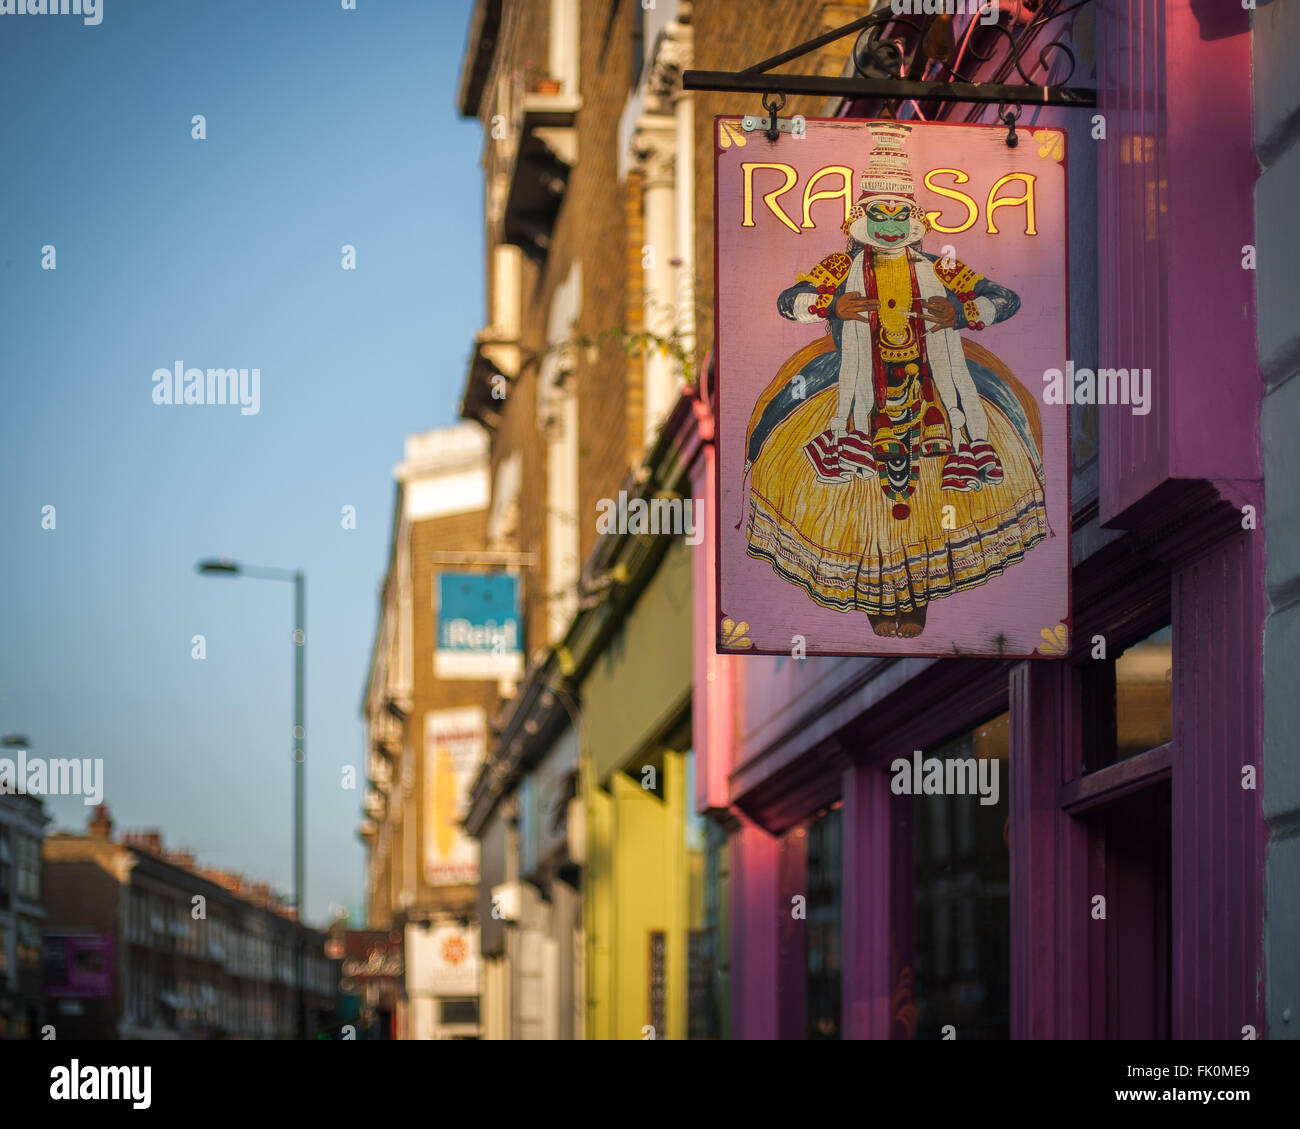 Rasa Indian restaurant sign and Church Street, Stoke Newington, London Stock Photo